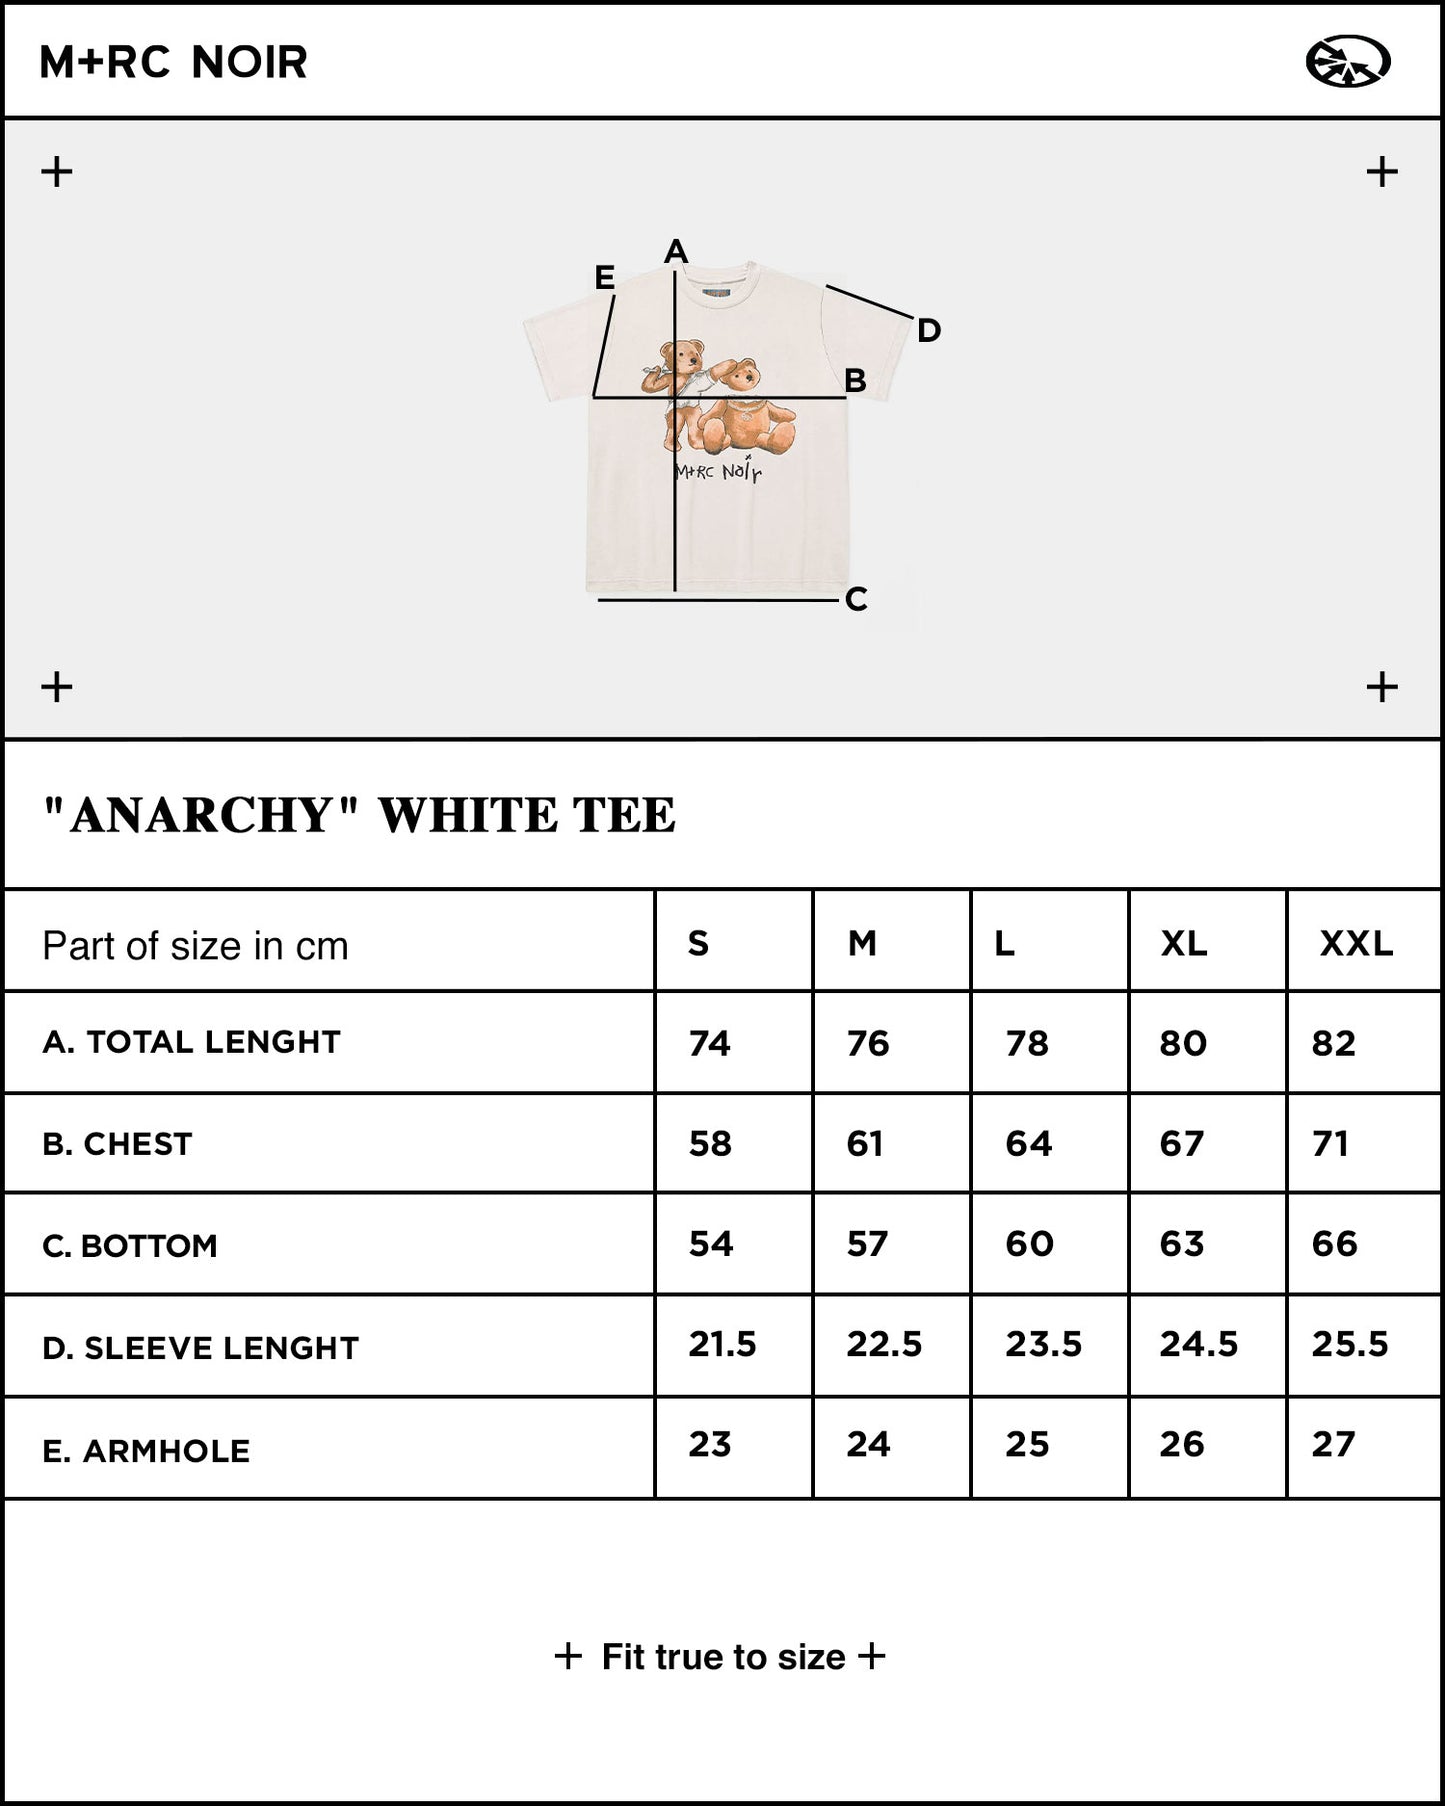 "Anarchy" White tee